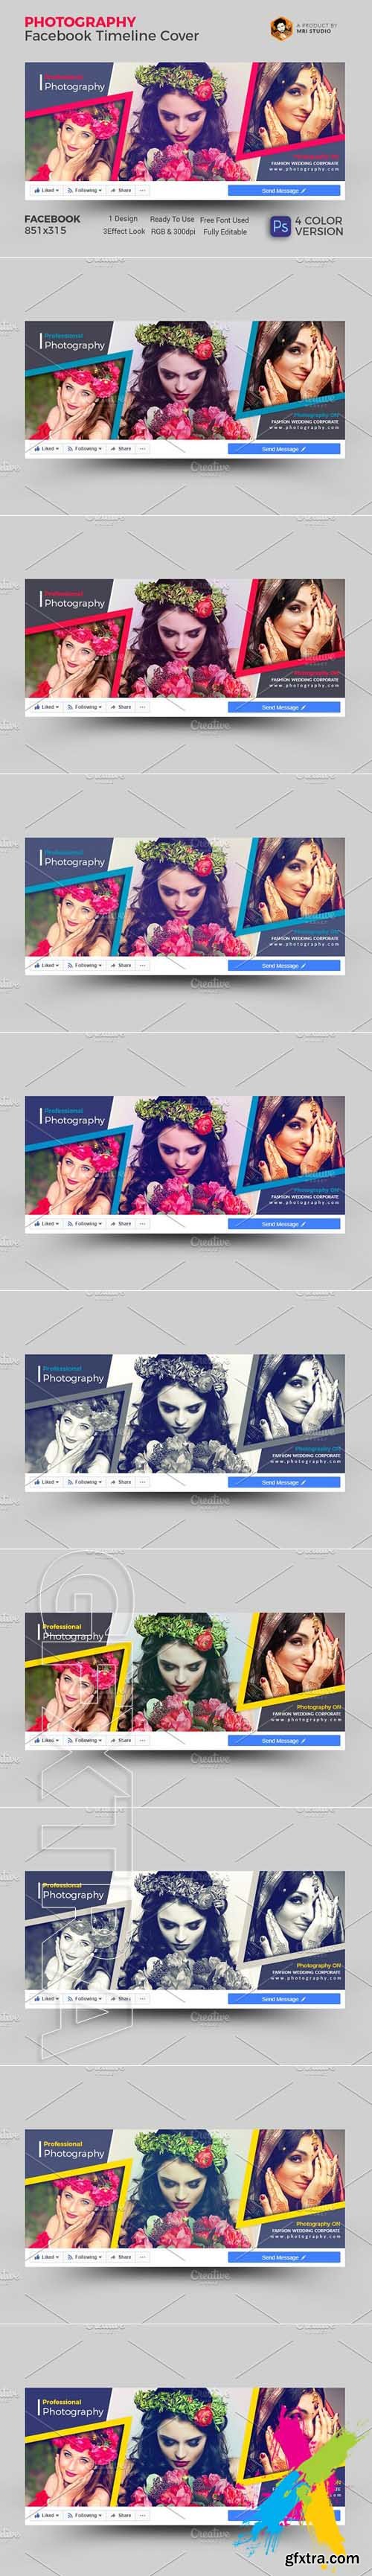 CreativeMarket - Photography Facebook Timeline Cover 1862921